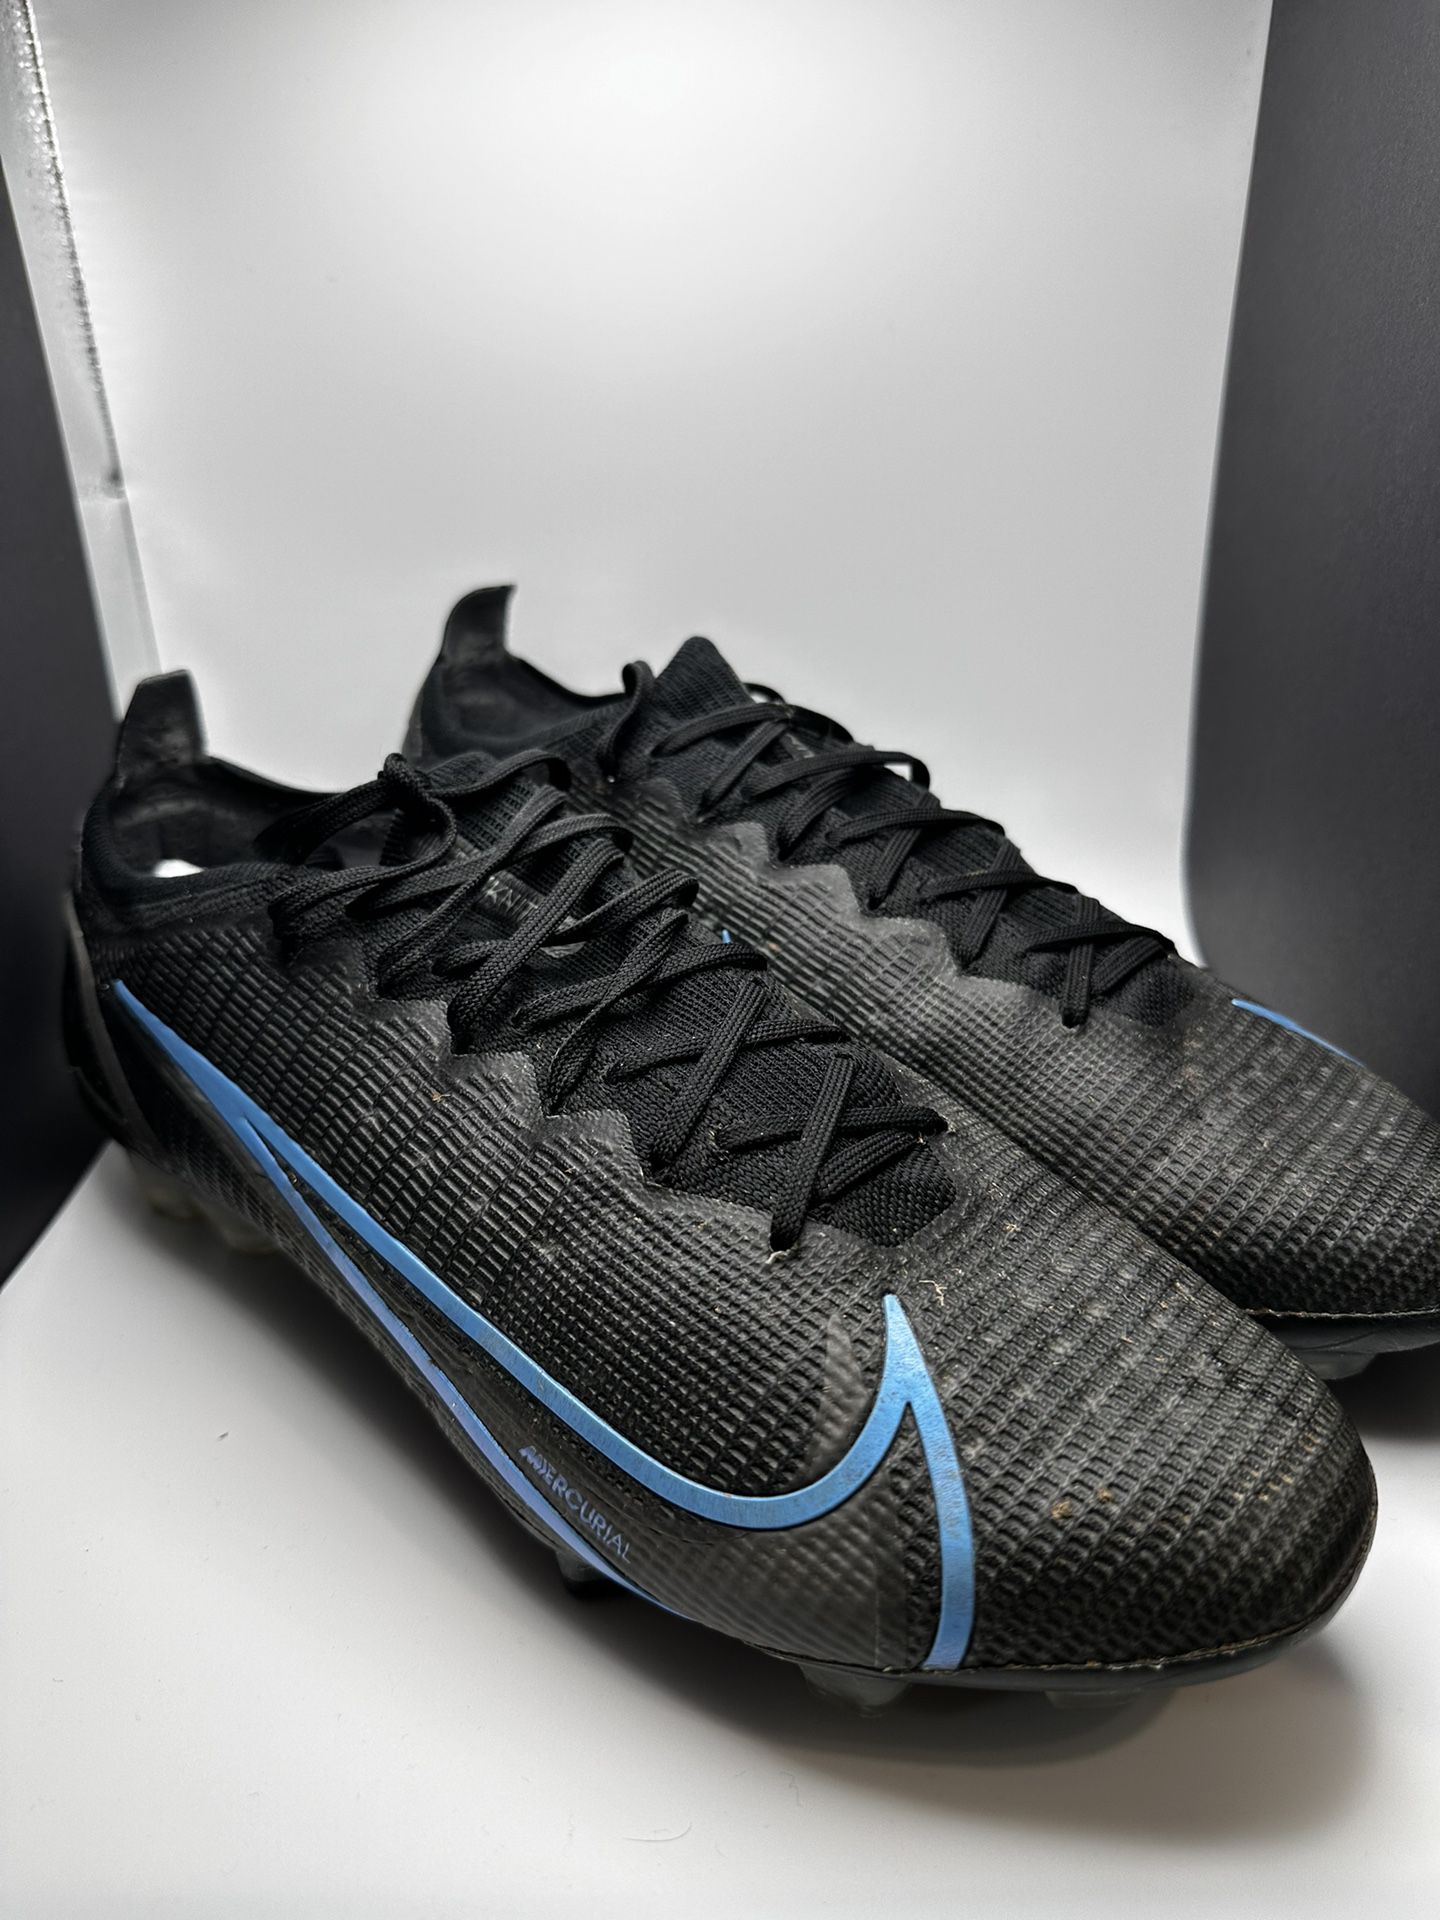 Nike Mercurial Vapor 14 ELITE FG - “Black Photo Blue” - 10.5M